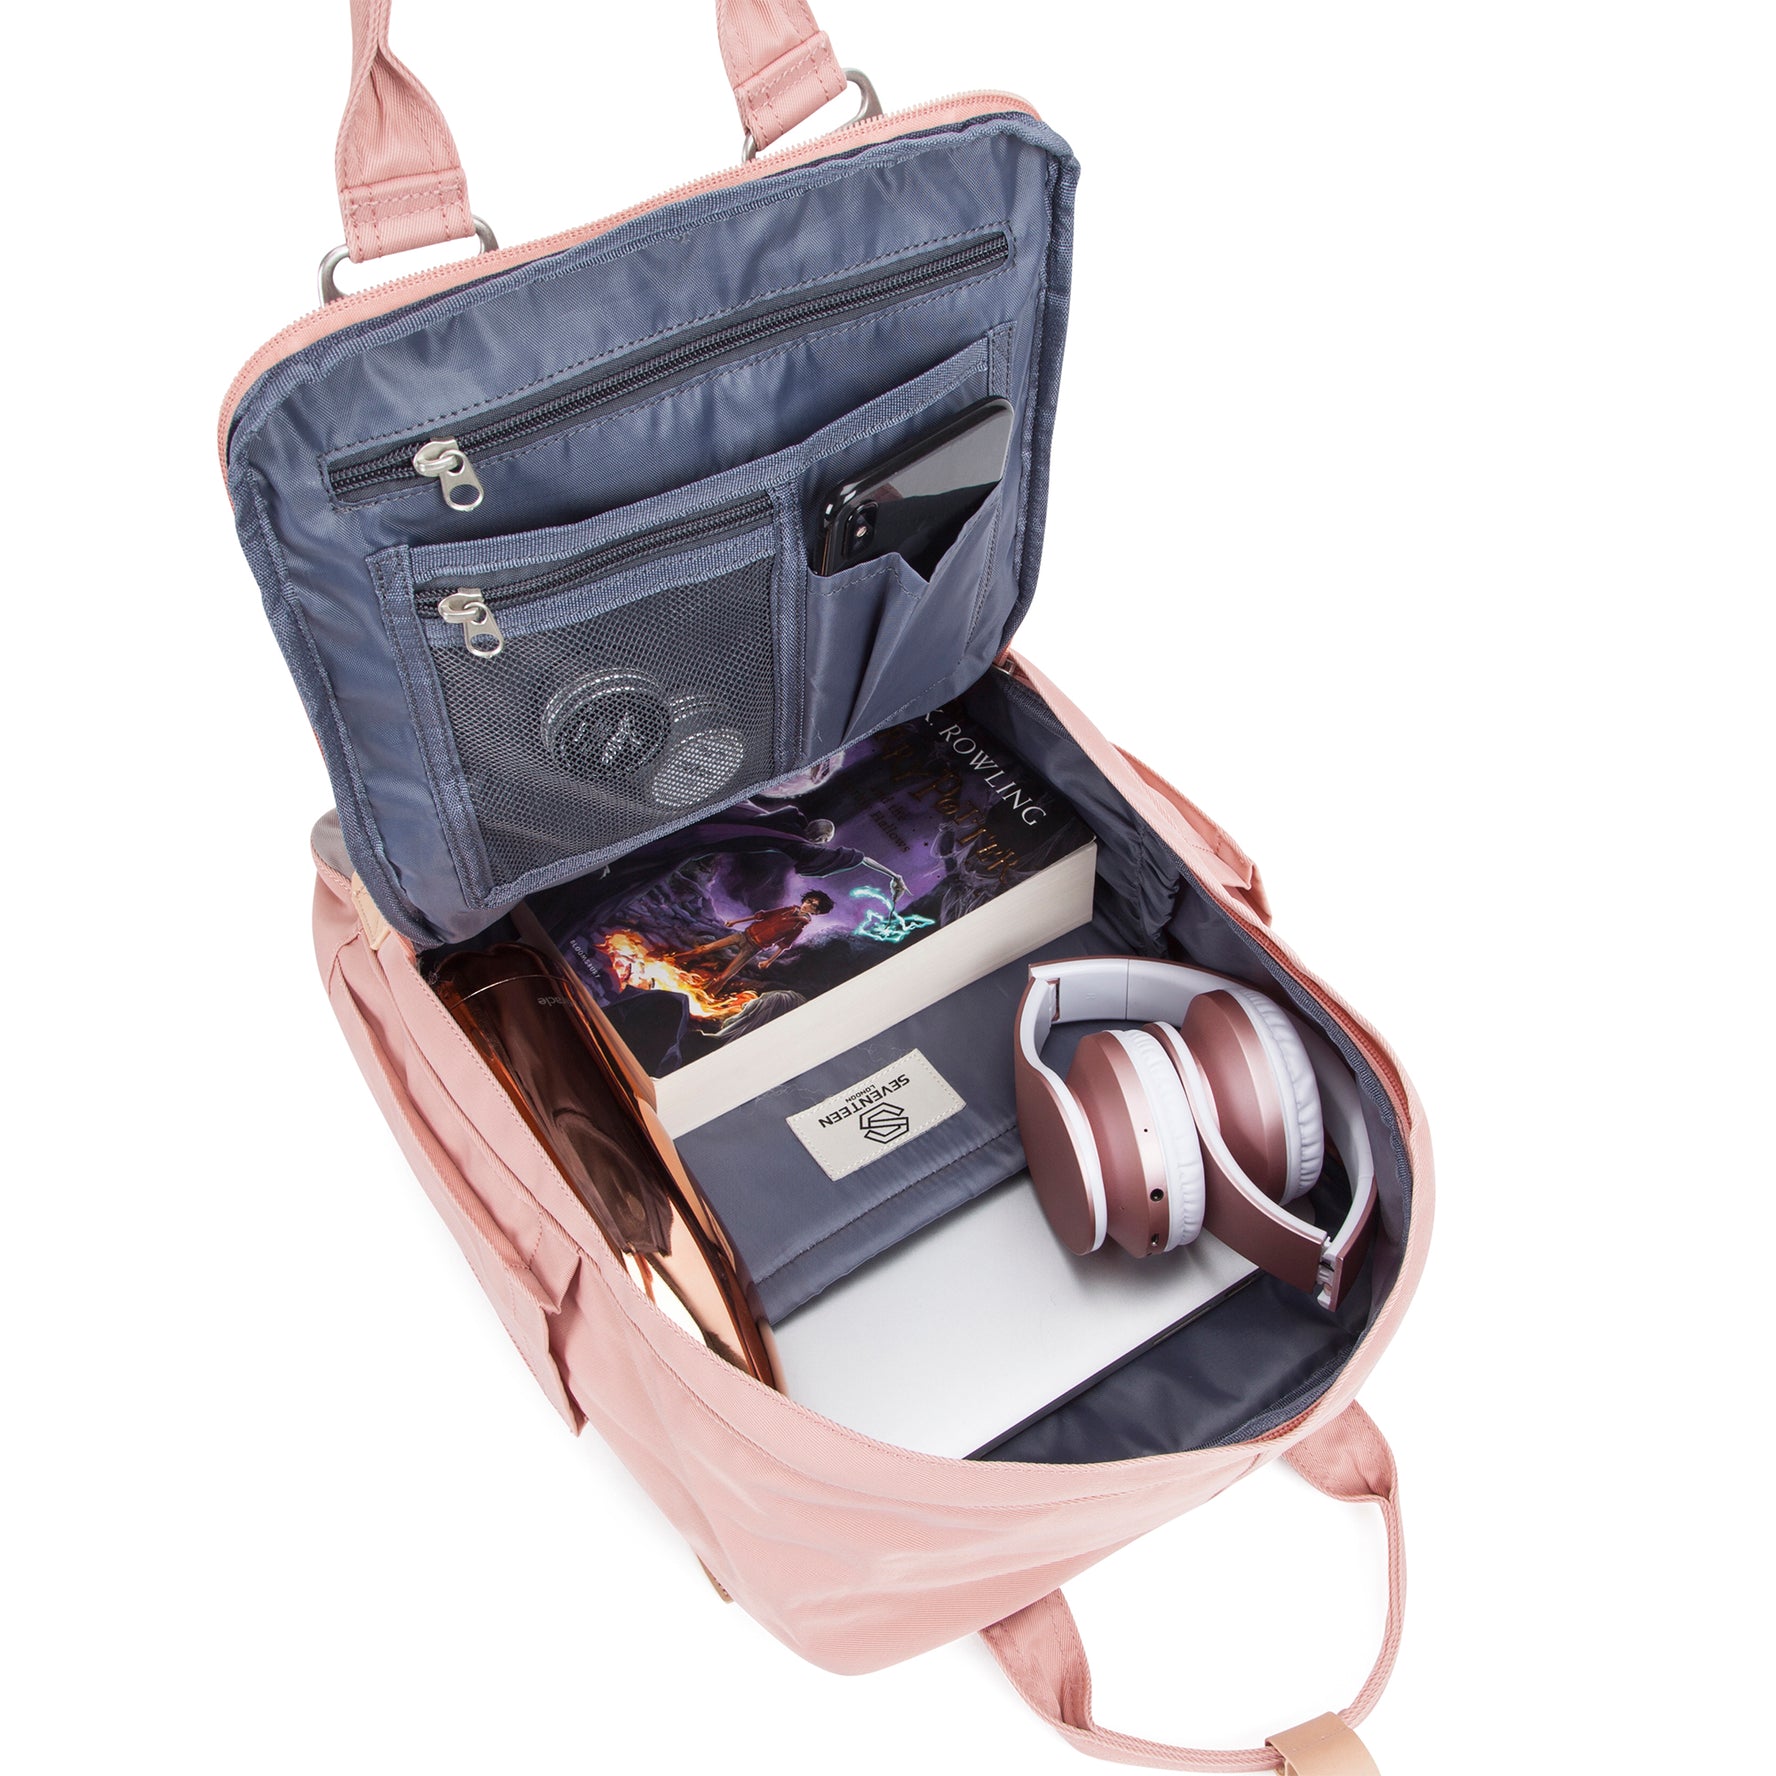 Wimbledon Backpack-Backpack-17 London-Pink-SchoolBagsAndStuff